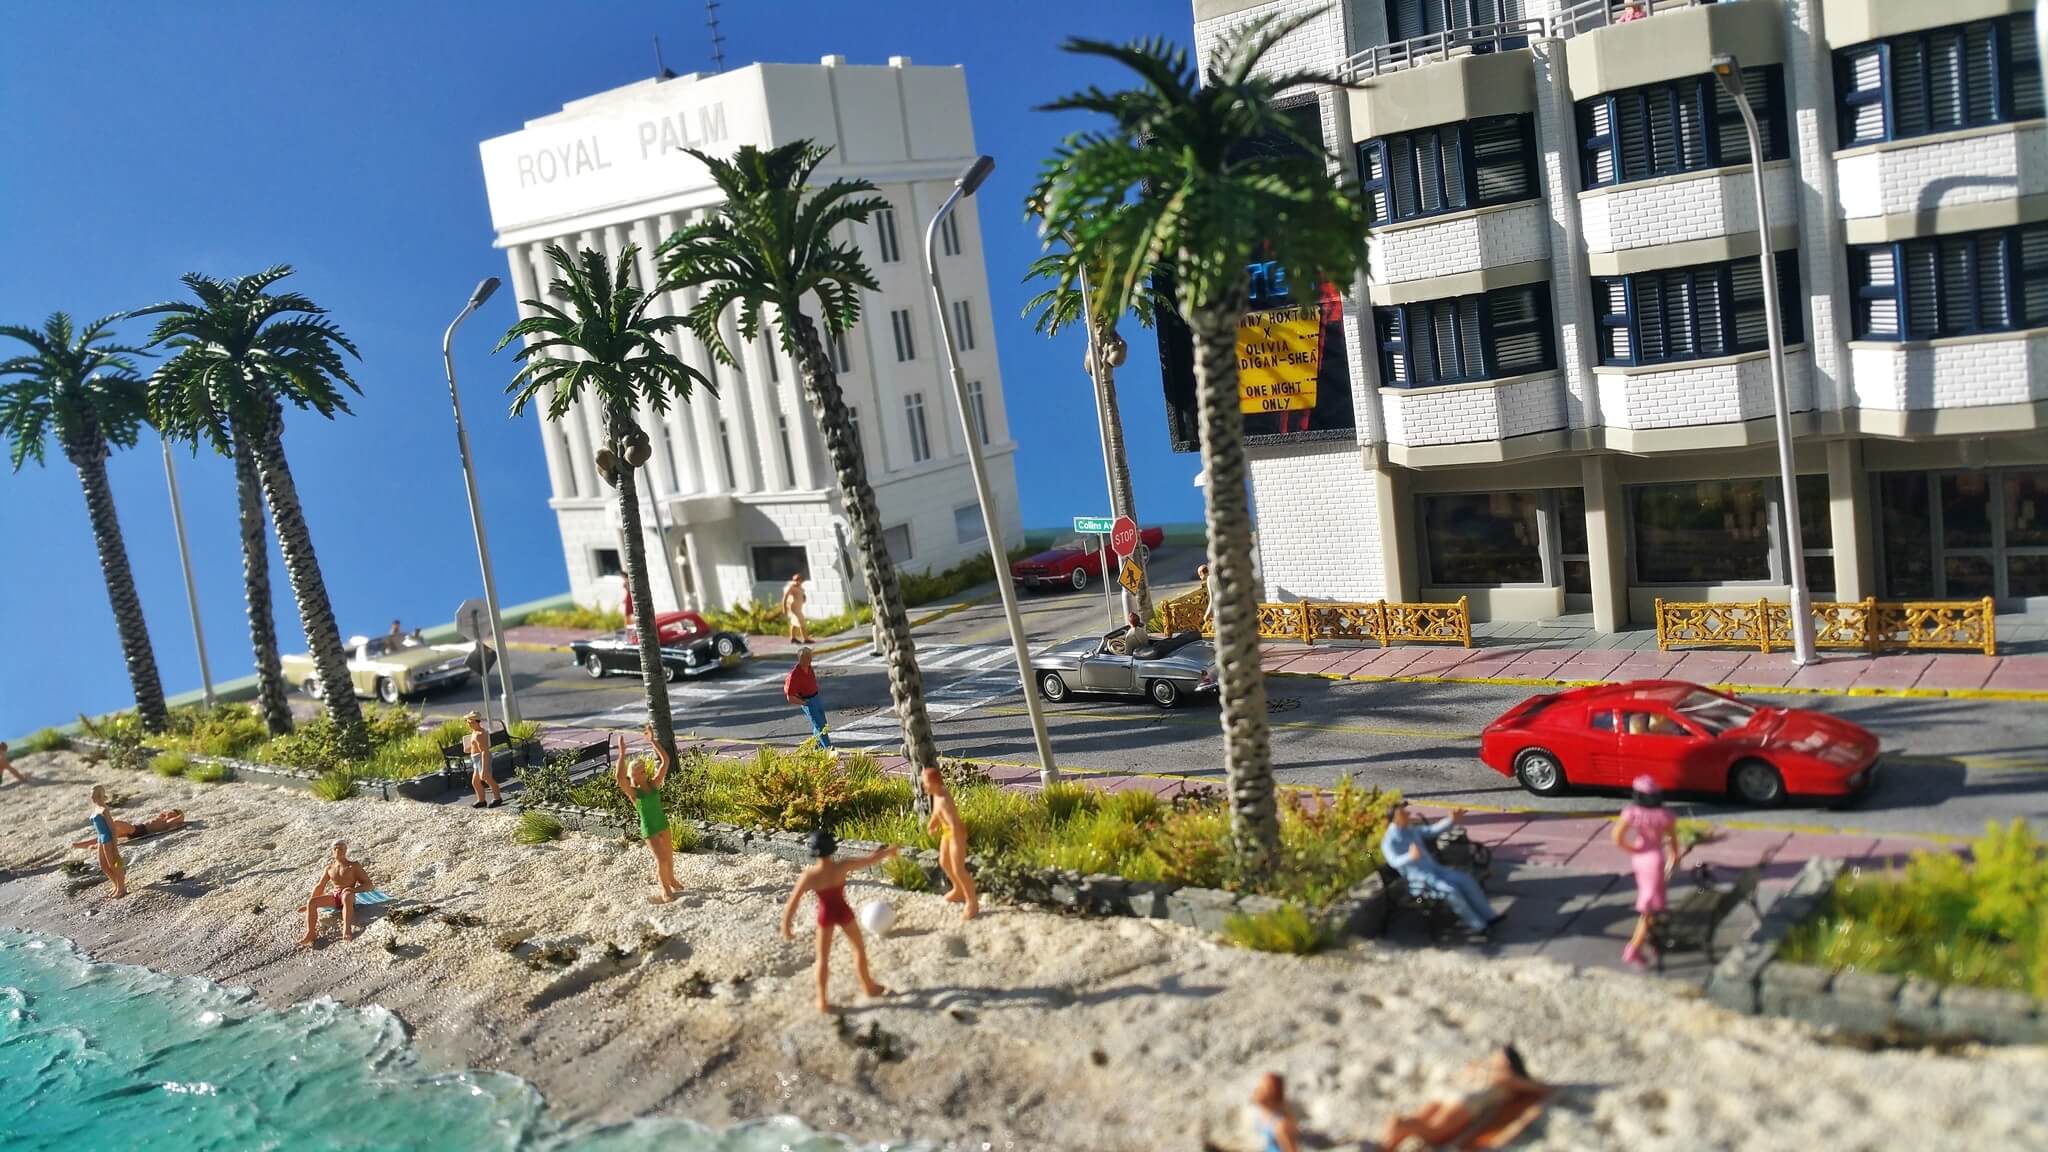 Sunbathers on Miami Beach - diorama